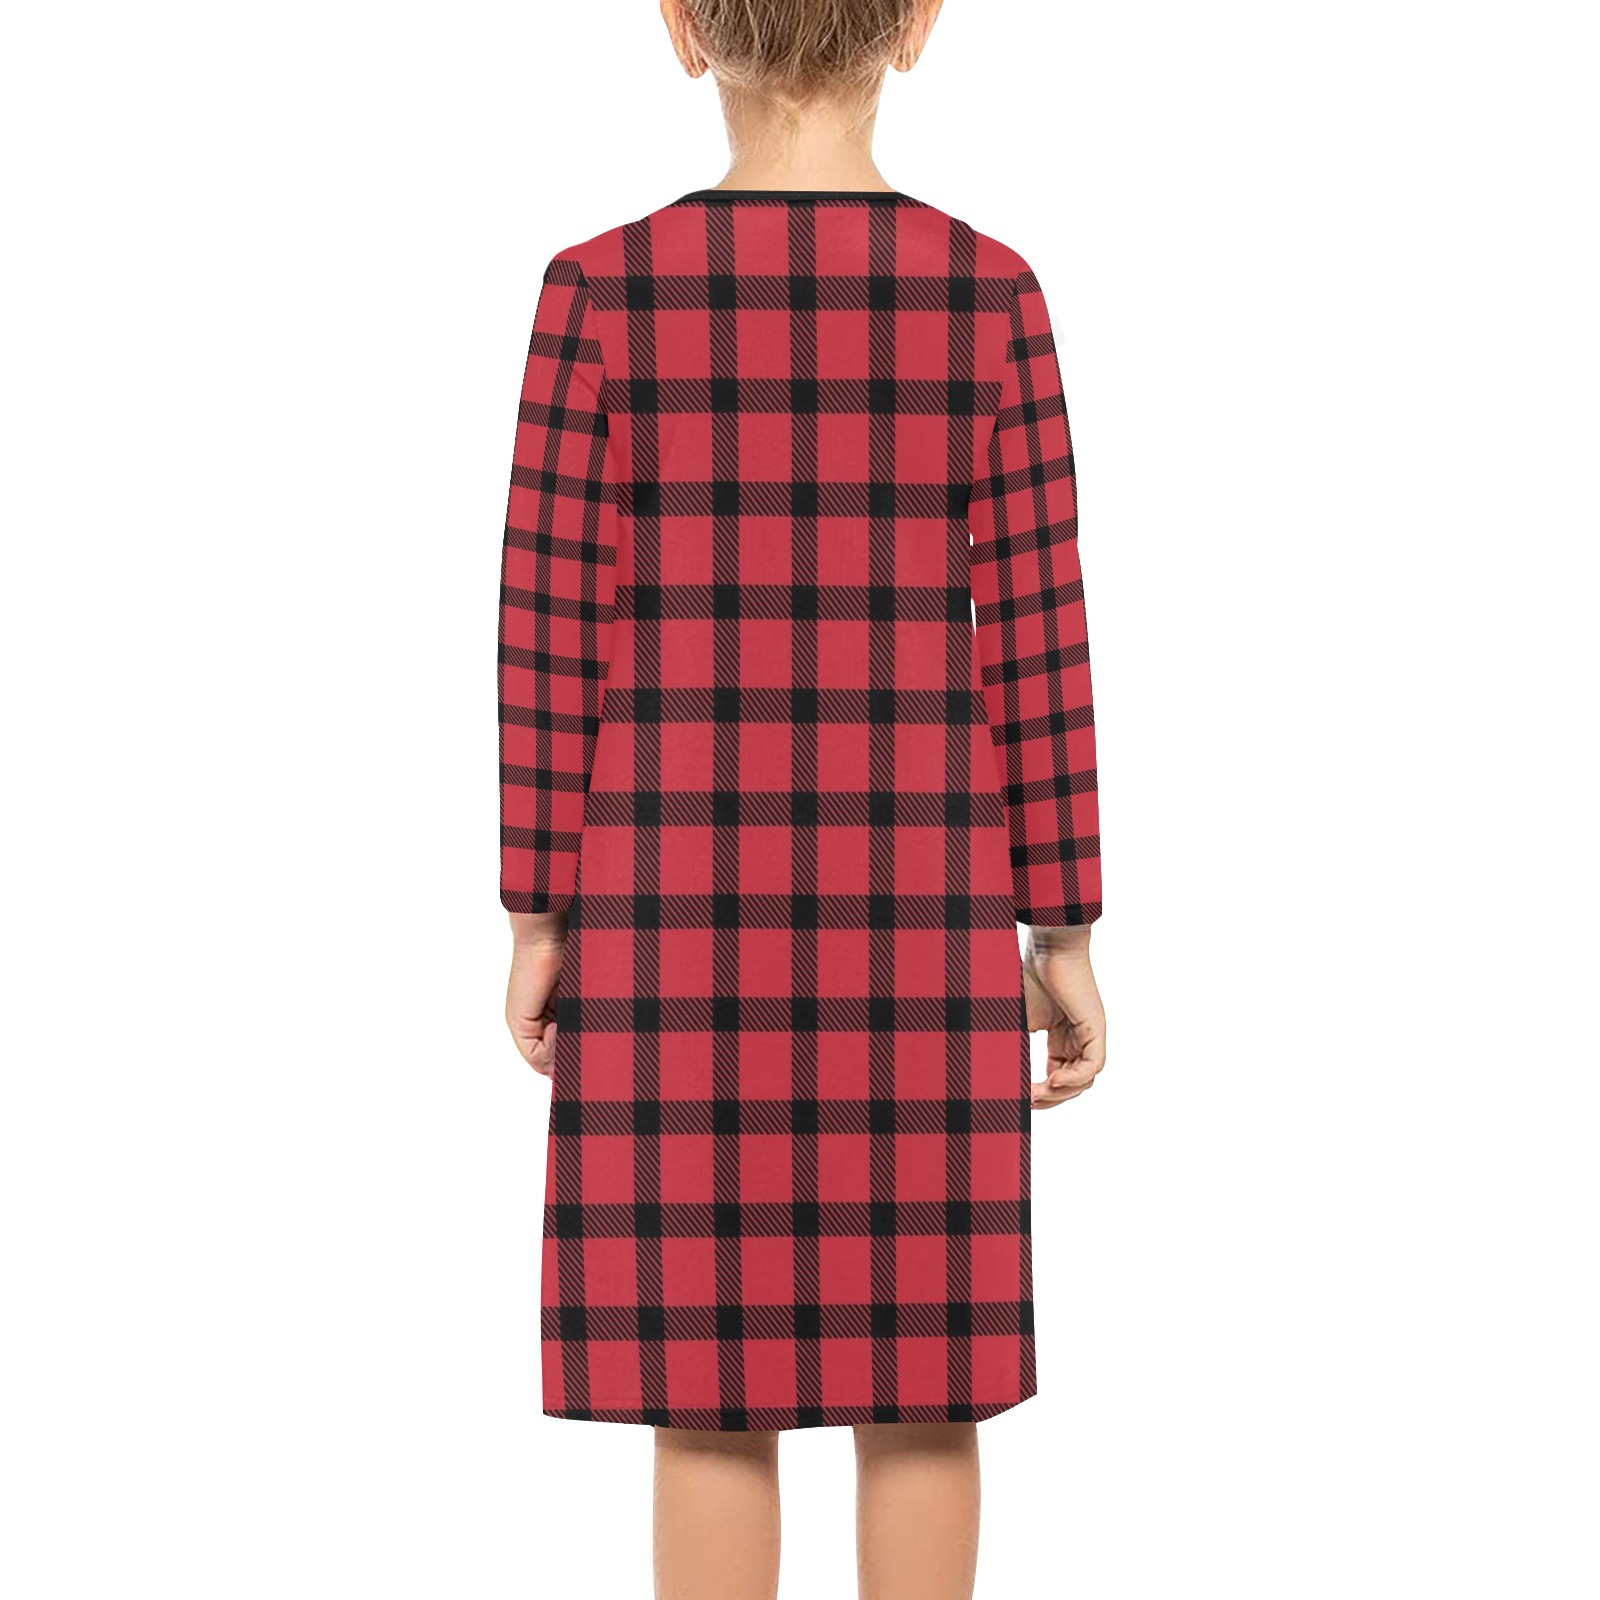 Red and Black Checks Girls' Long Sleeve Dress (Model D59)